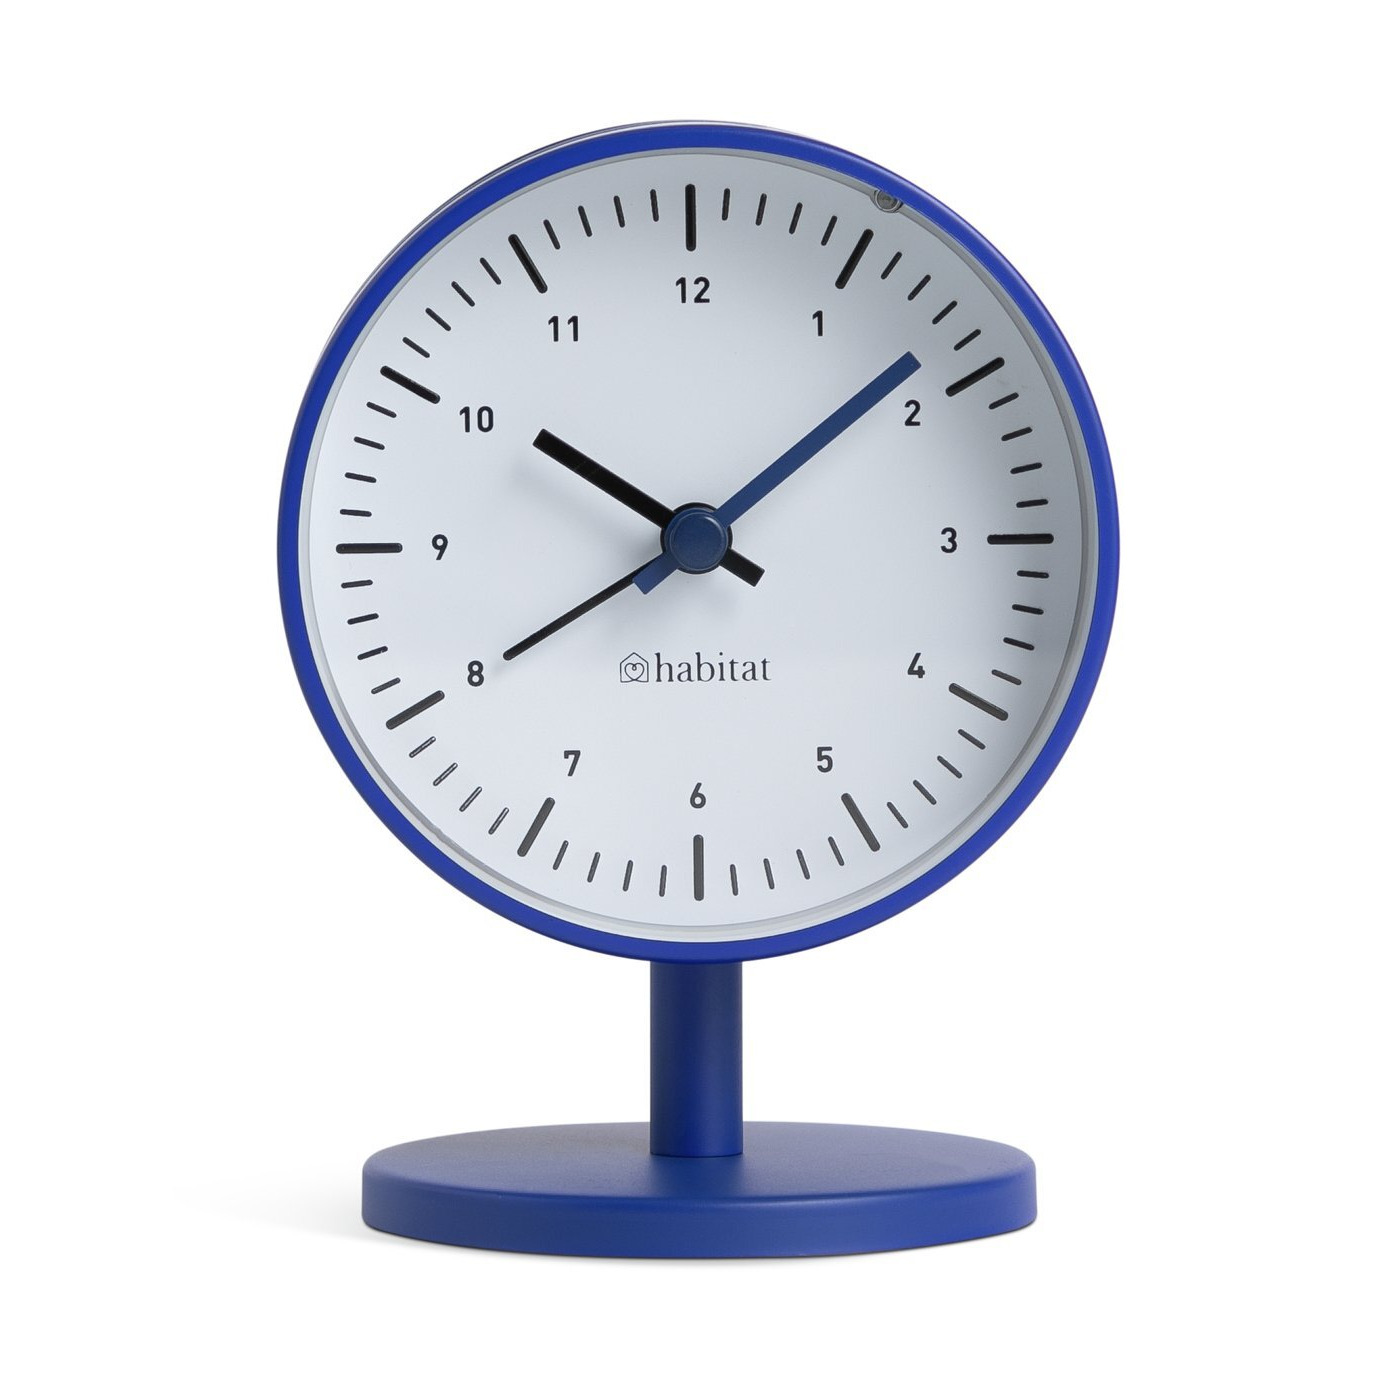 Habitat Analogue Alarm Clock - Blue - image 1